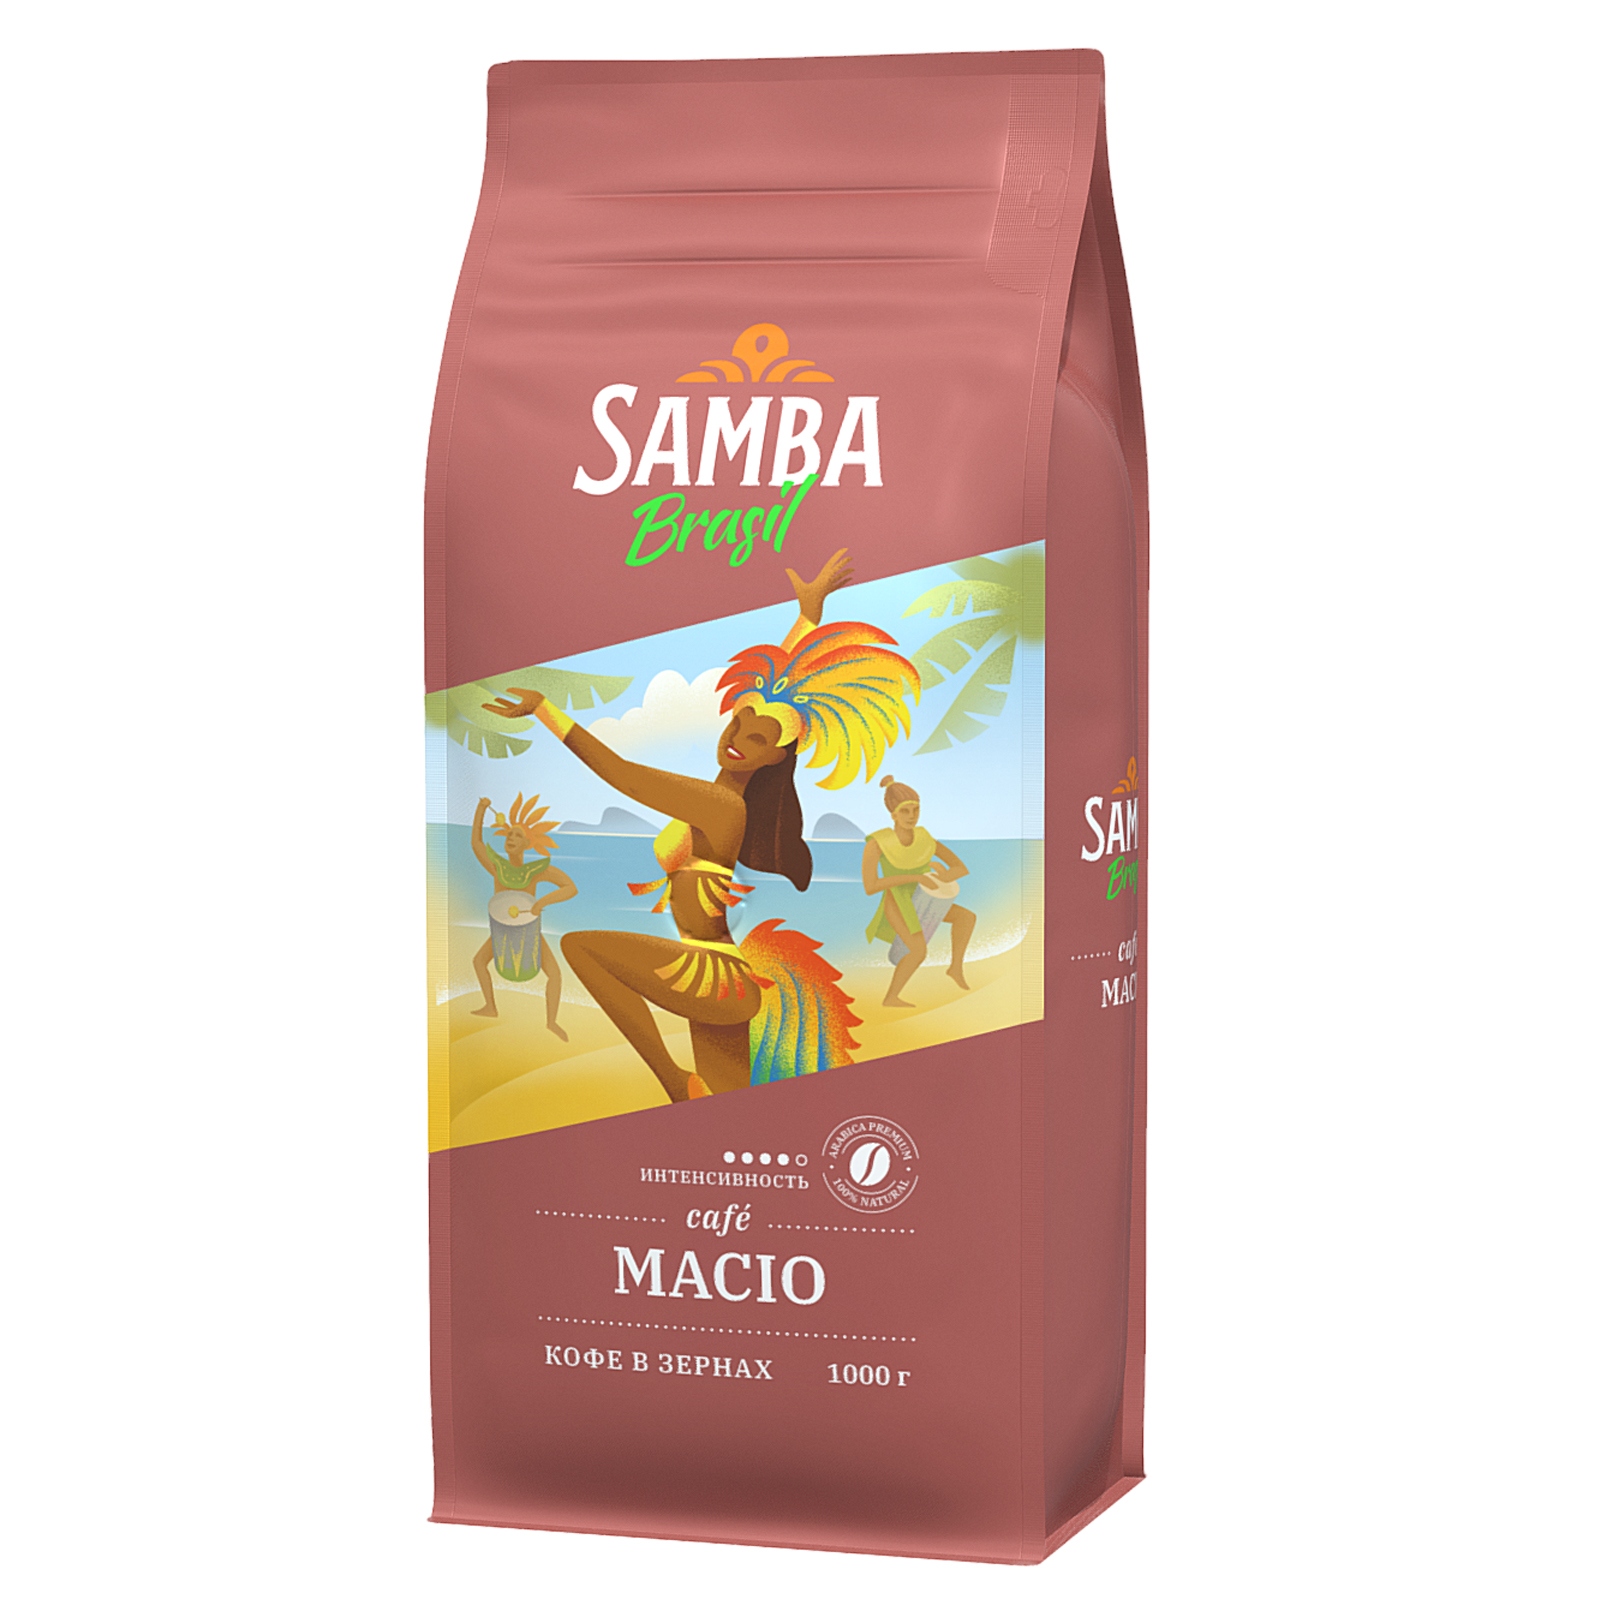 Кофе в зернах Samba Cafe Brasil MACIO, арабика, робуста, средняя обжарка,1000 гр